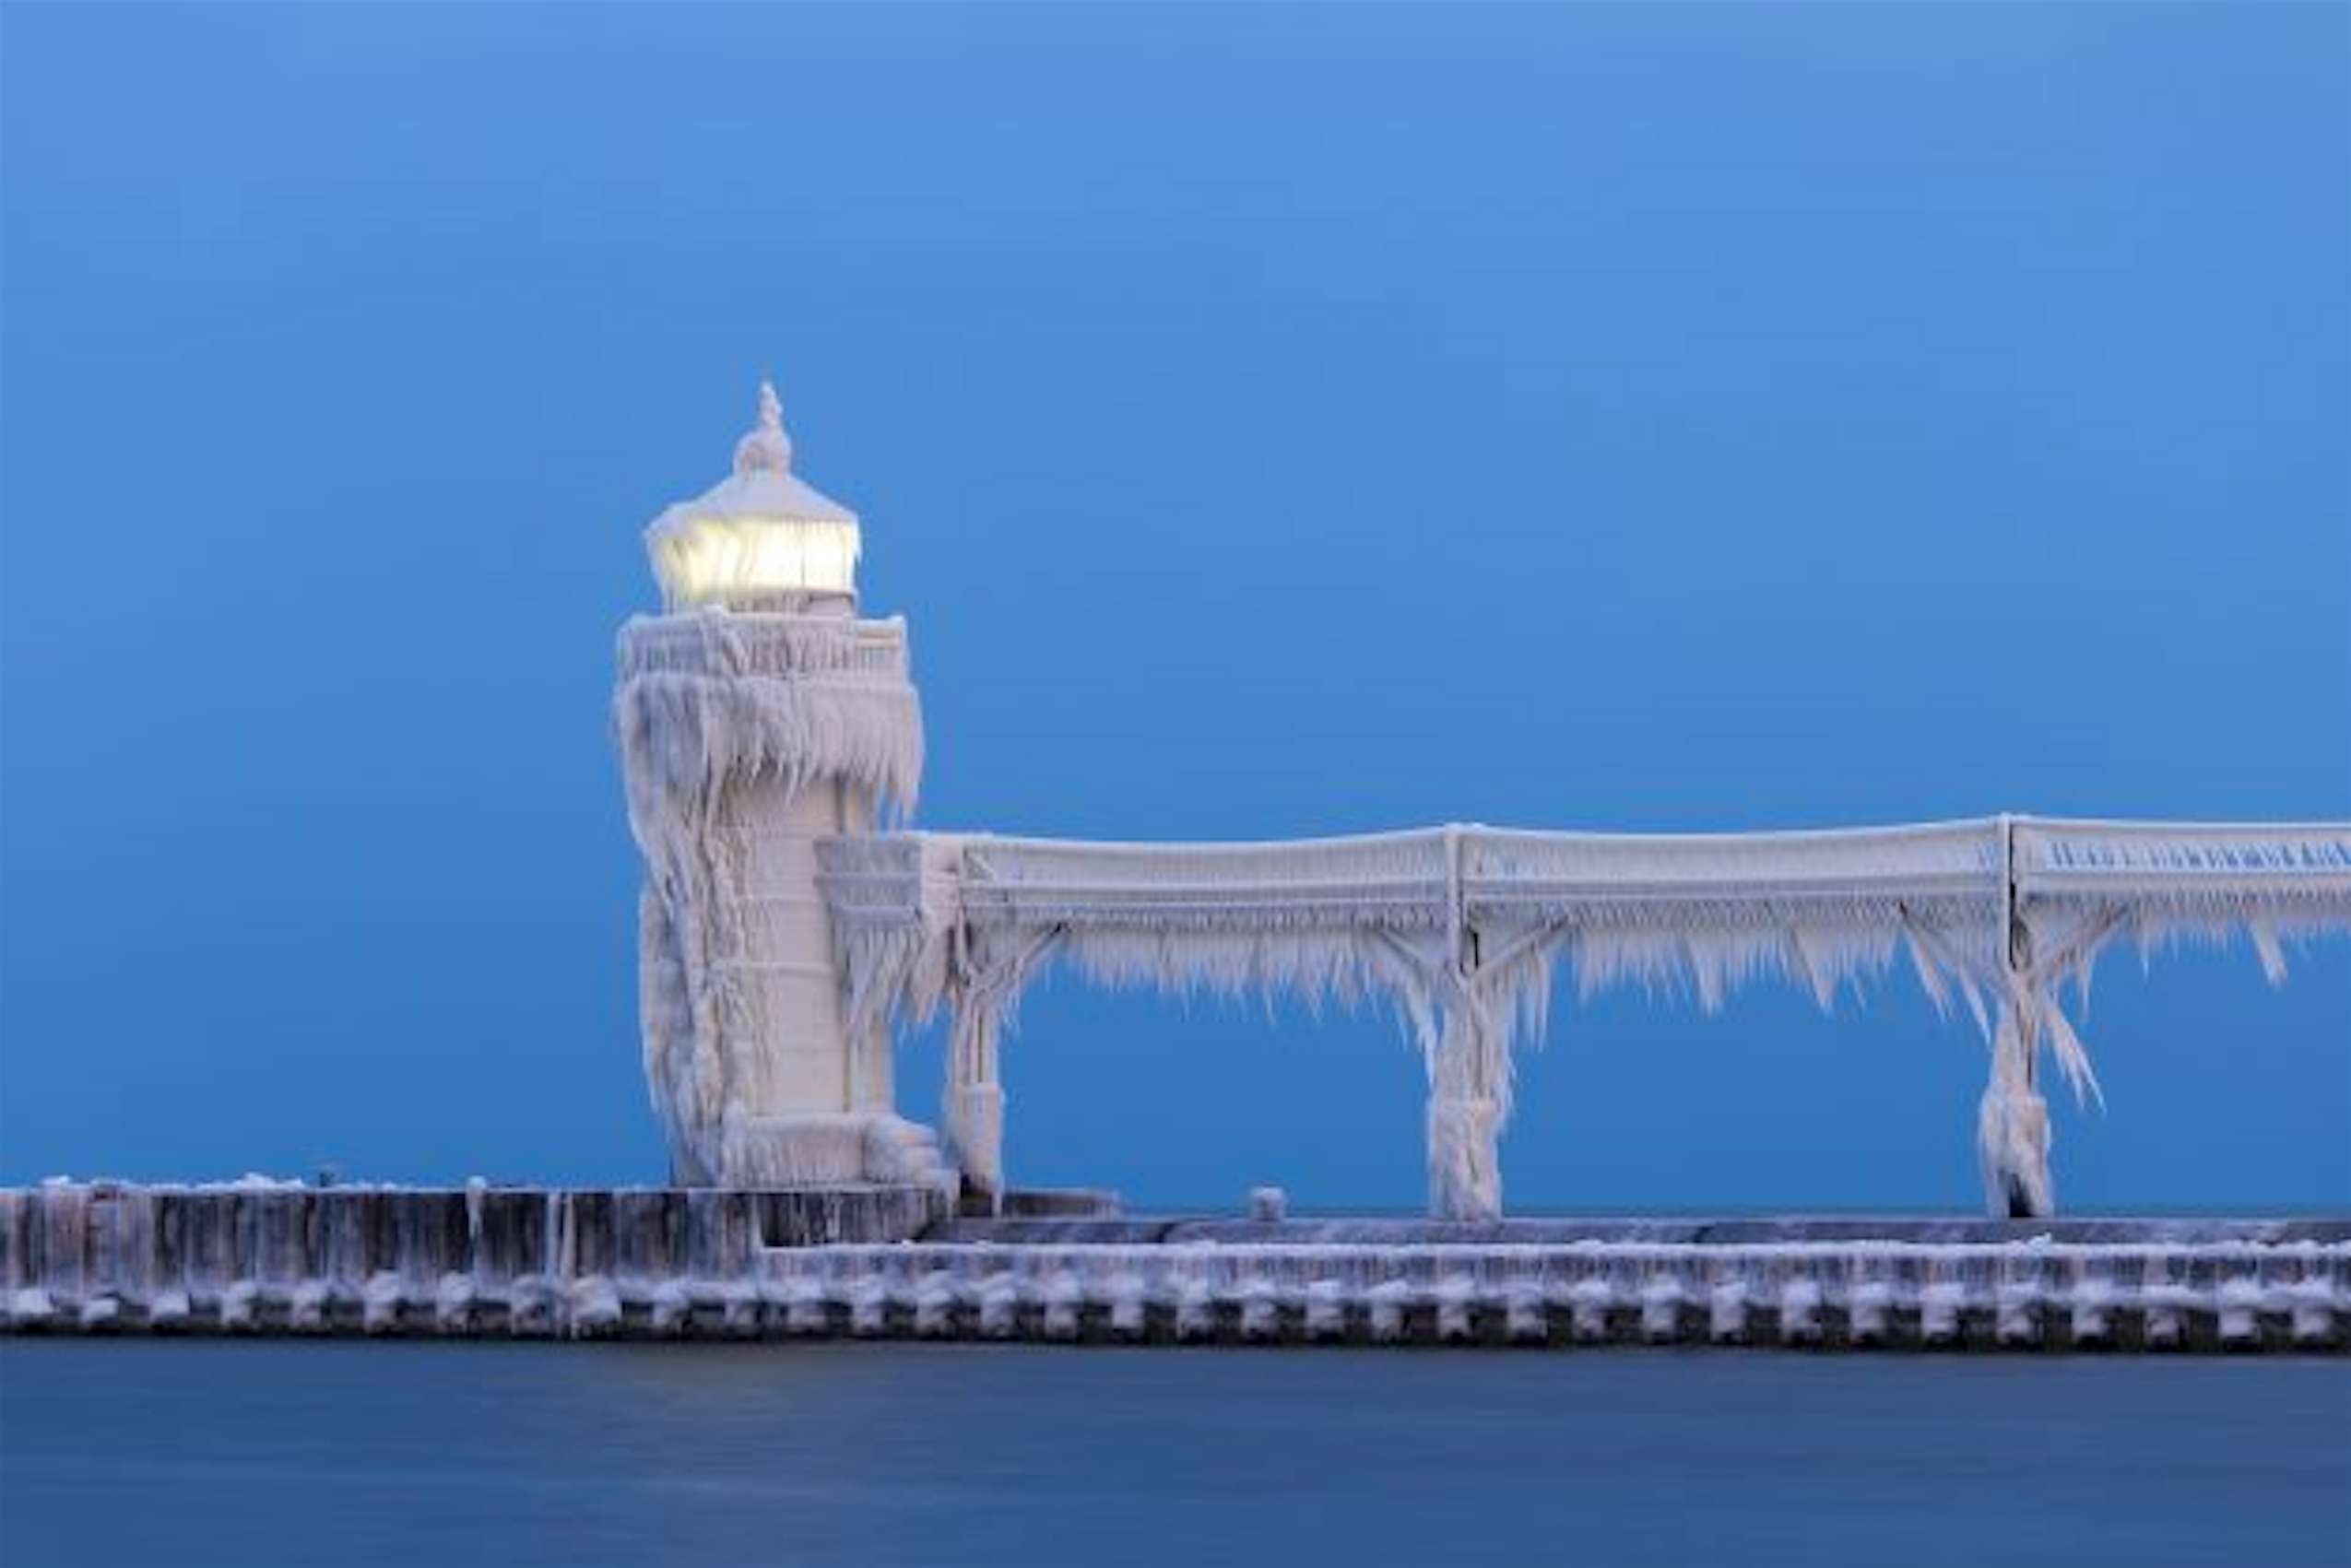 Stunning photos of Lake Michigan lighthouse encased in ice